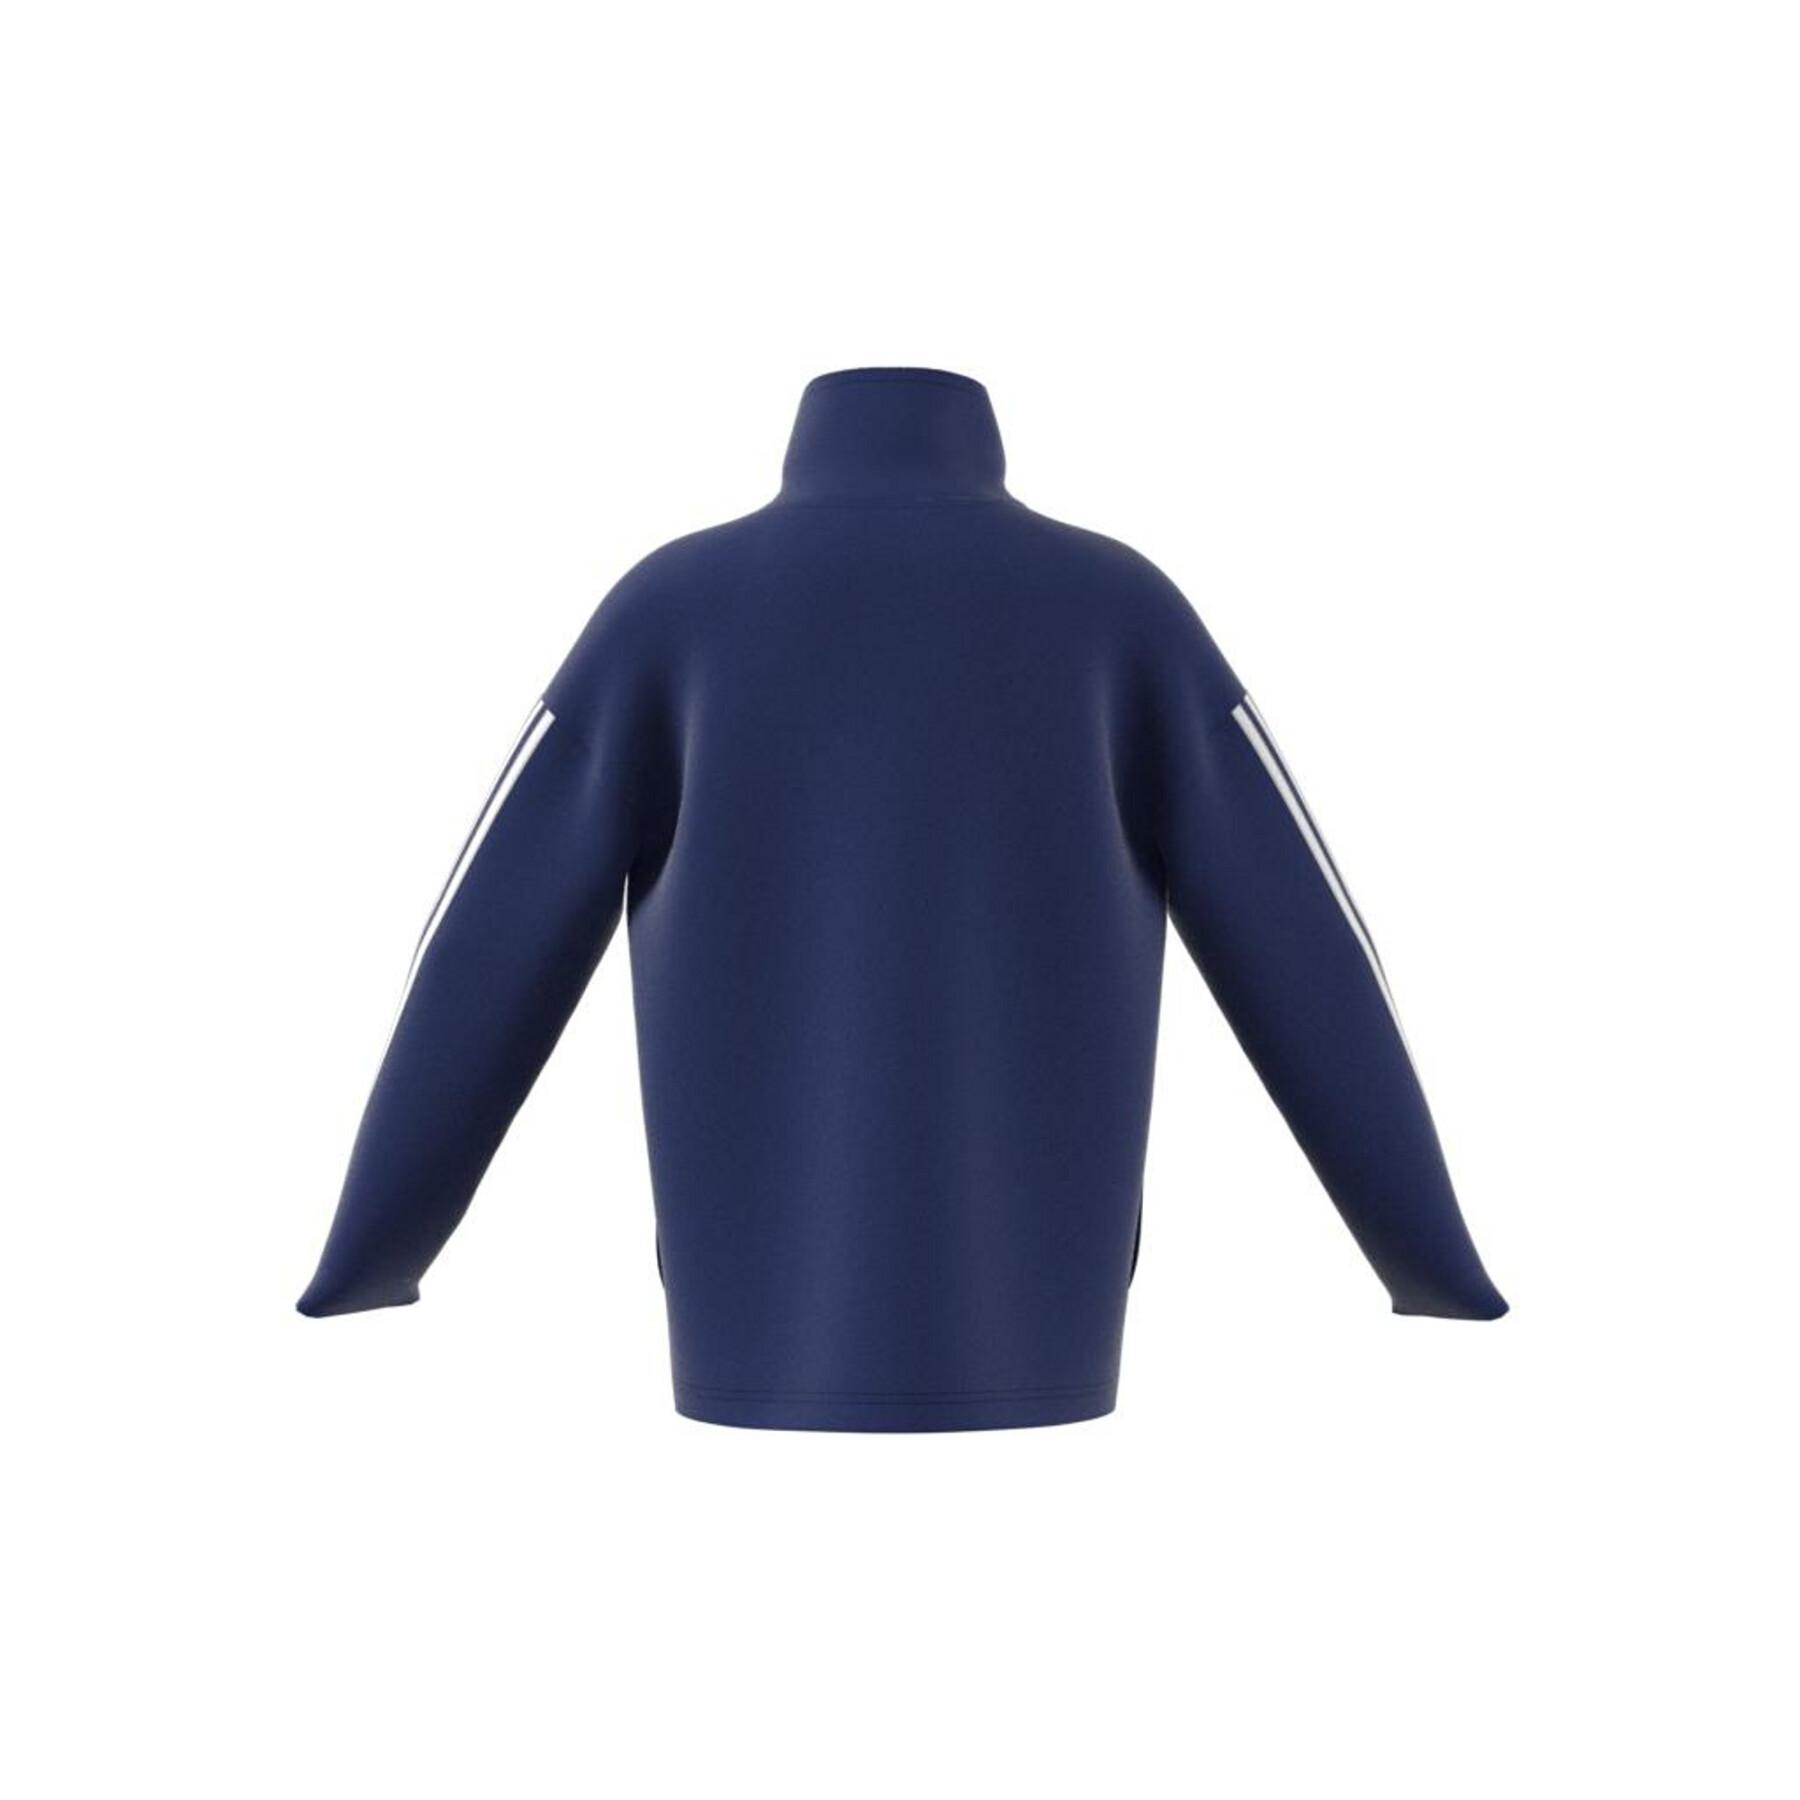 Children's jacket adidas ARKD3 Warm 3-Stripes Fleece Track Top